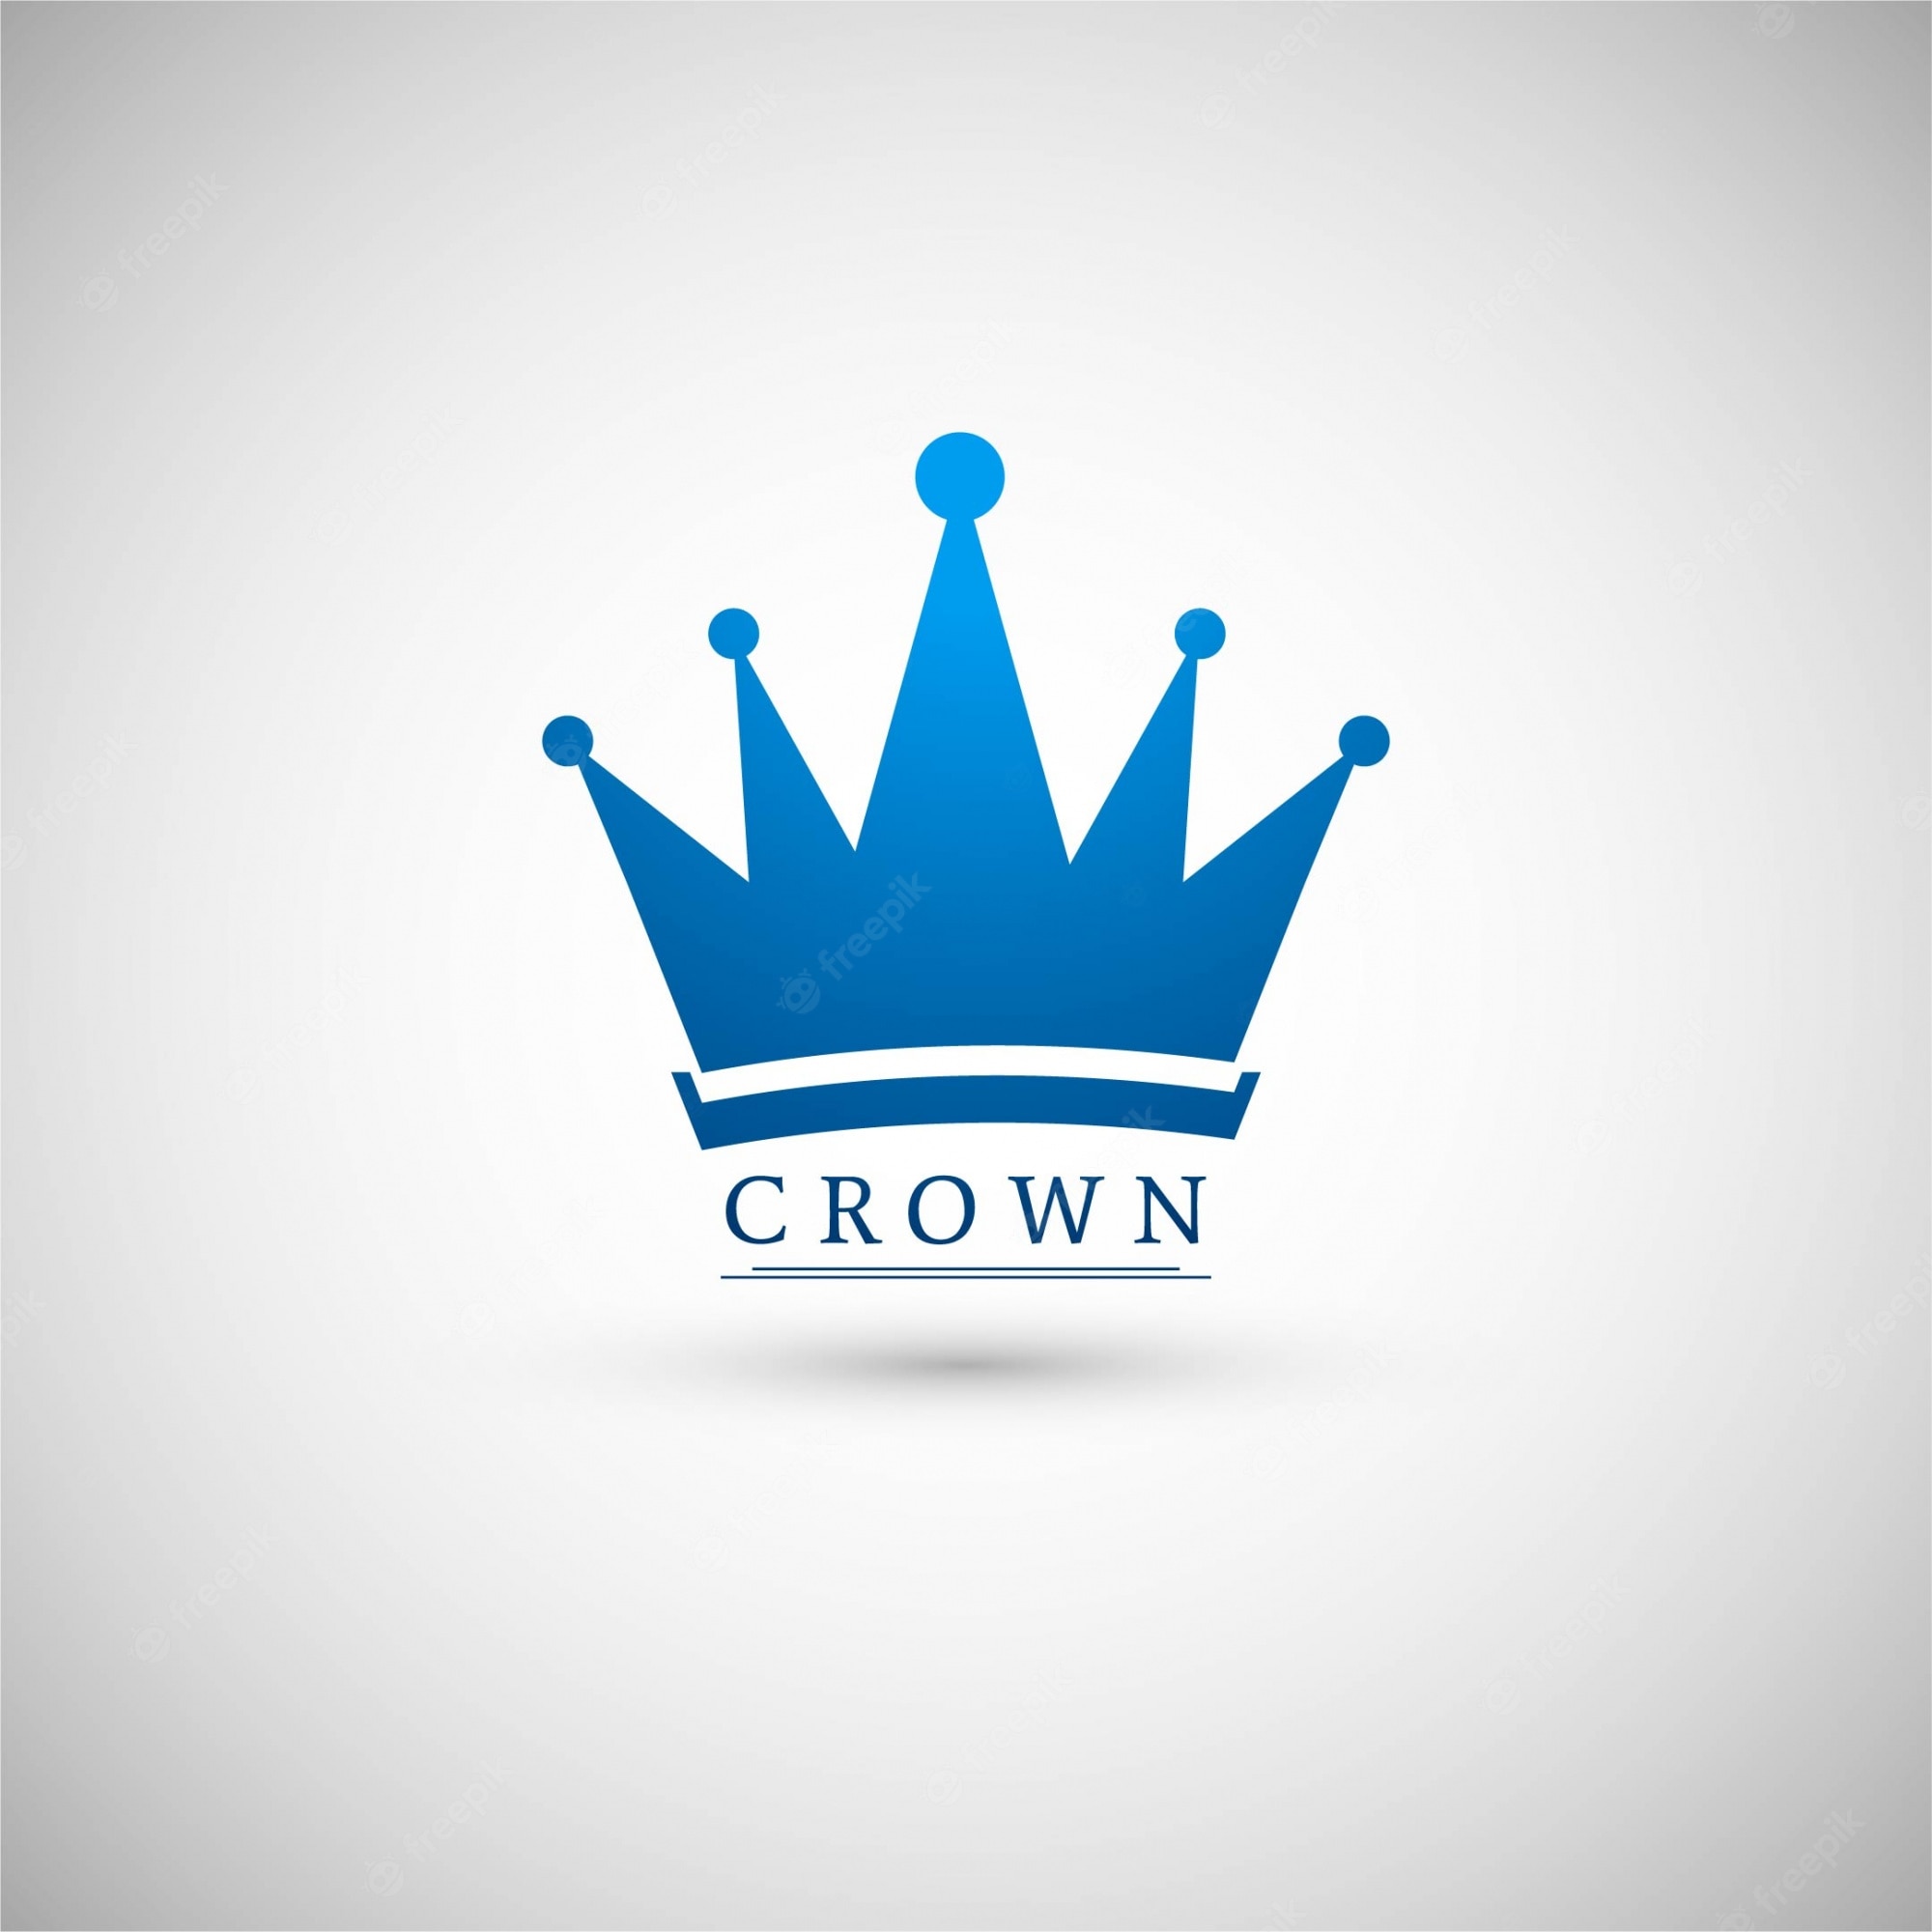 Queen crown logo Image. Free Vectors, & PSD